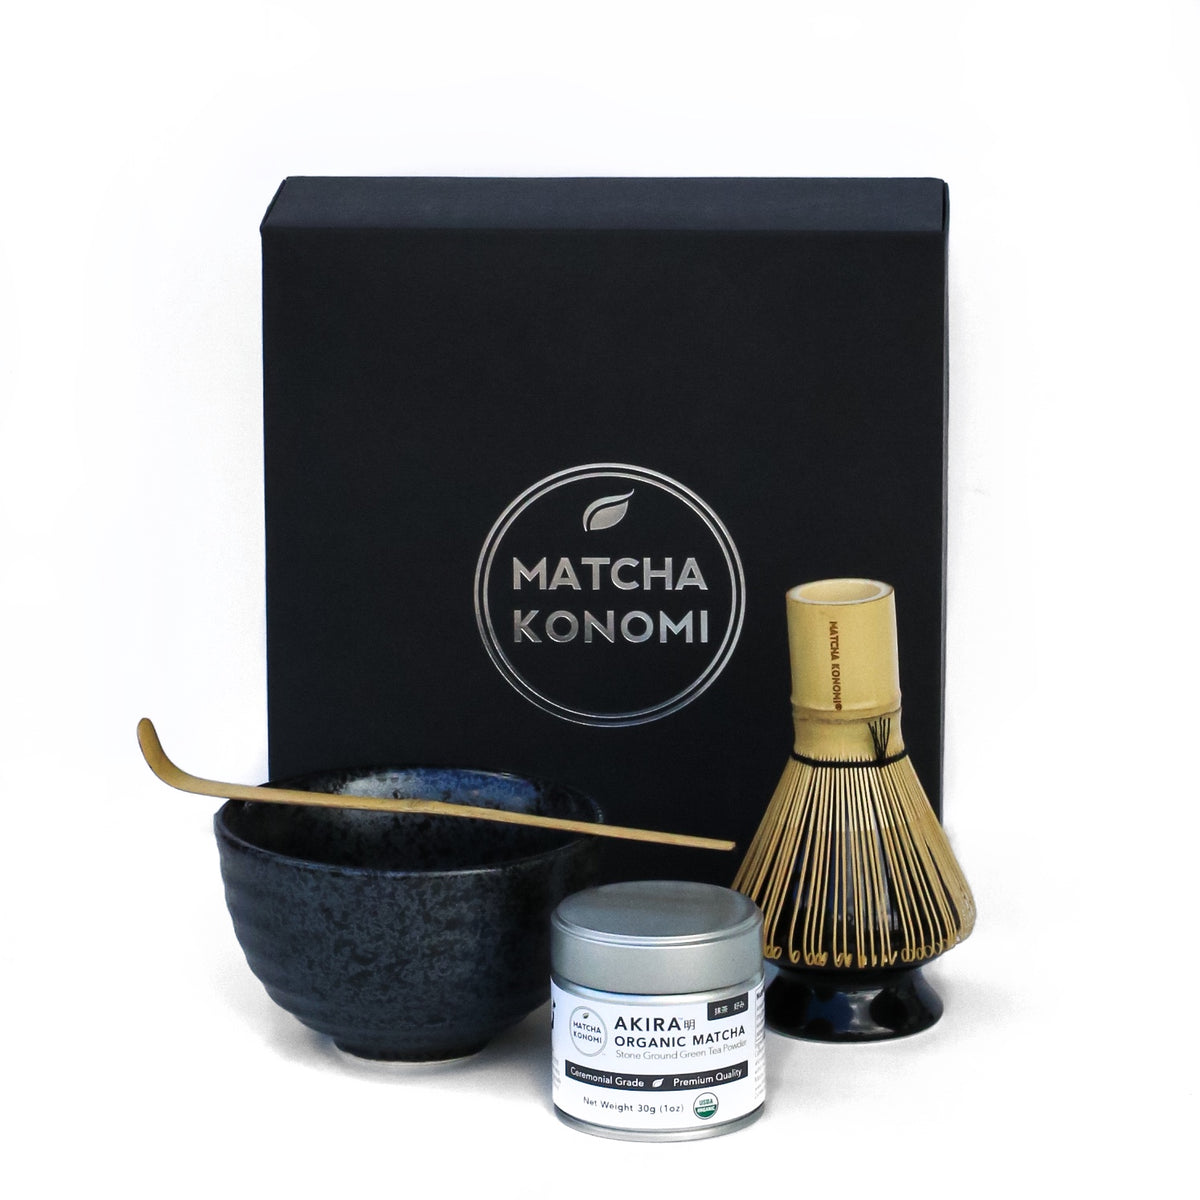 Matcha 1111 : Gift Set